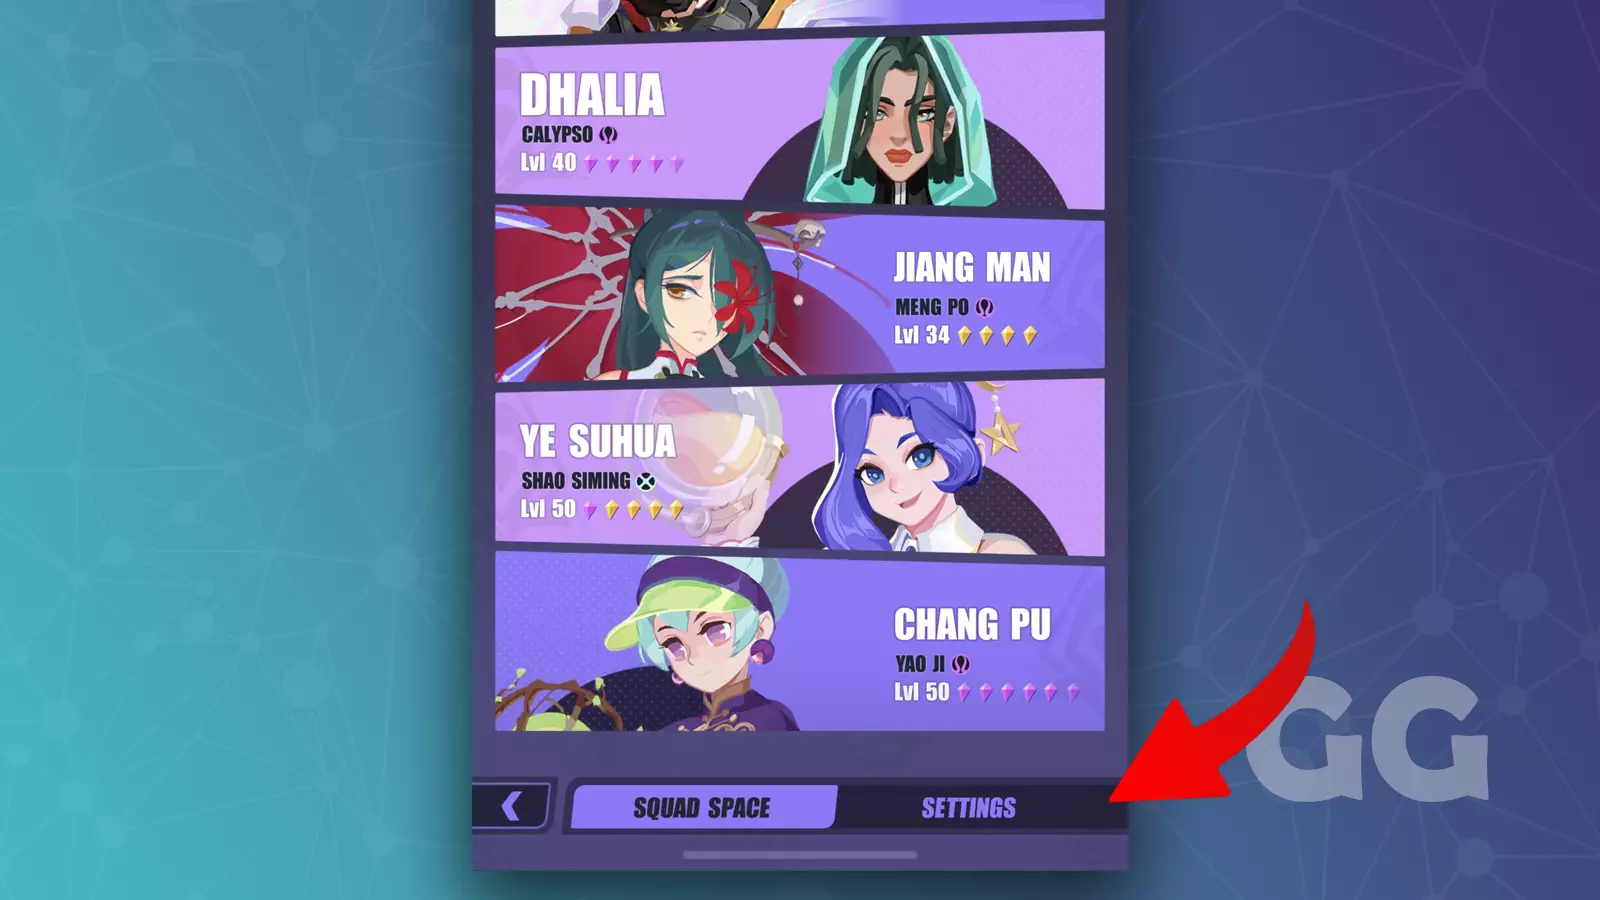 mobile game settings menu showing characters